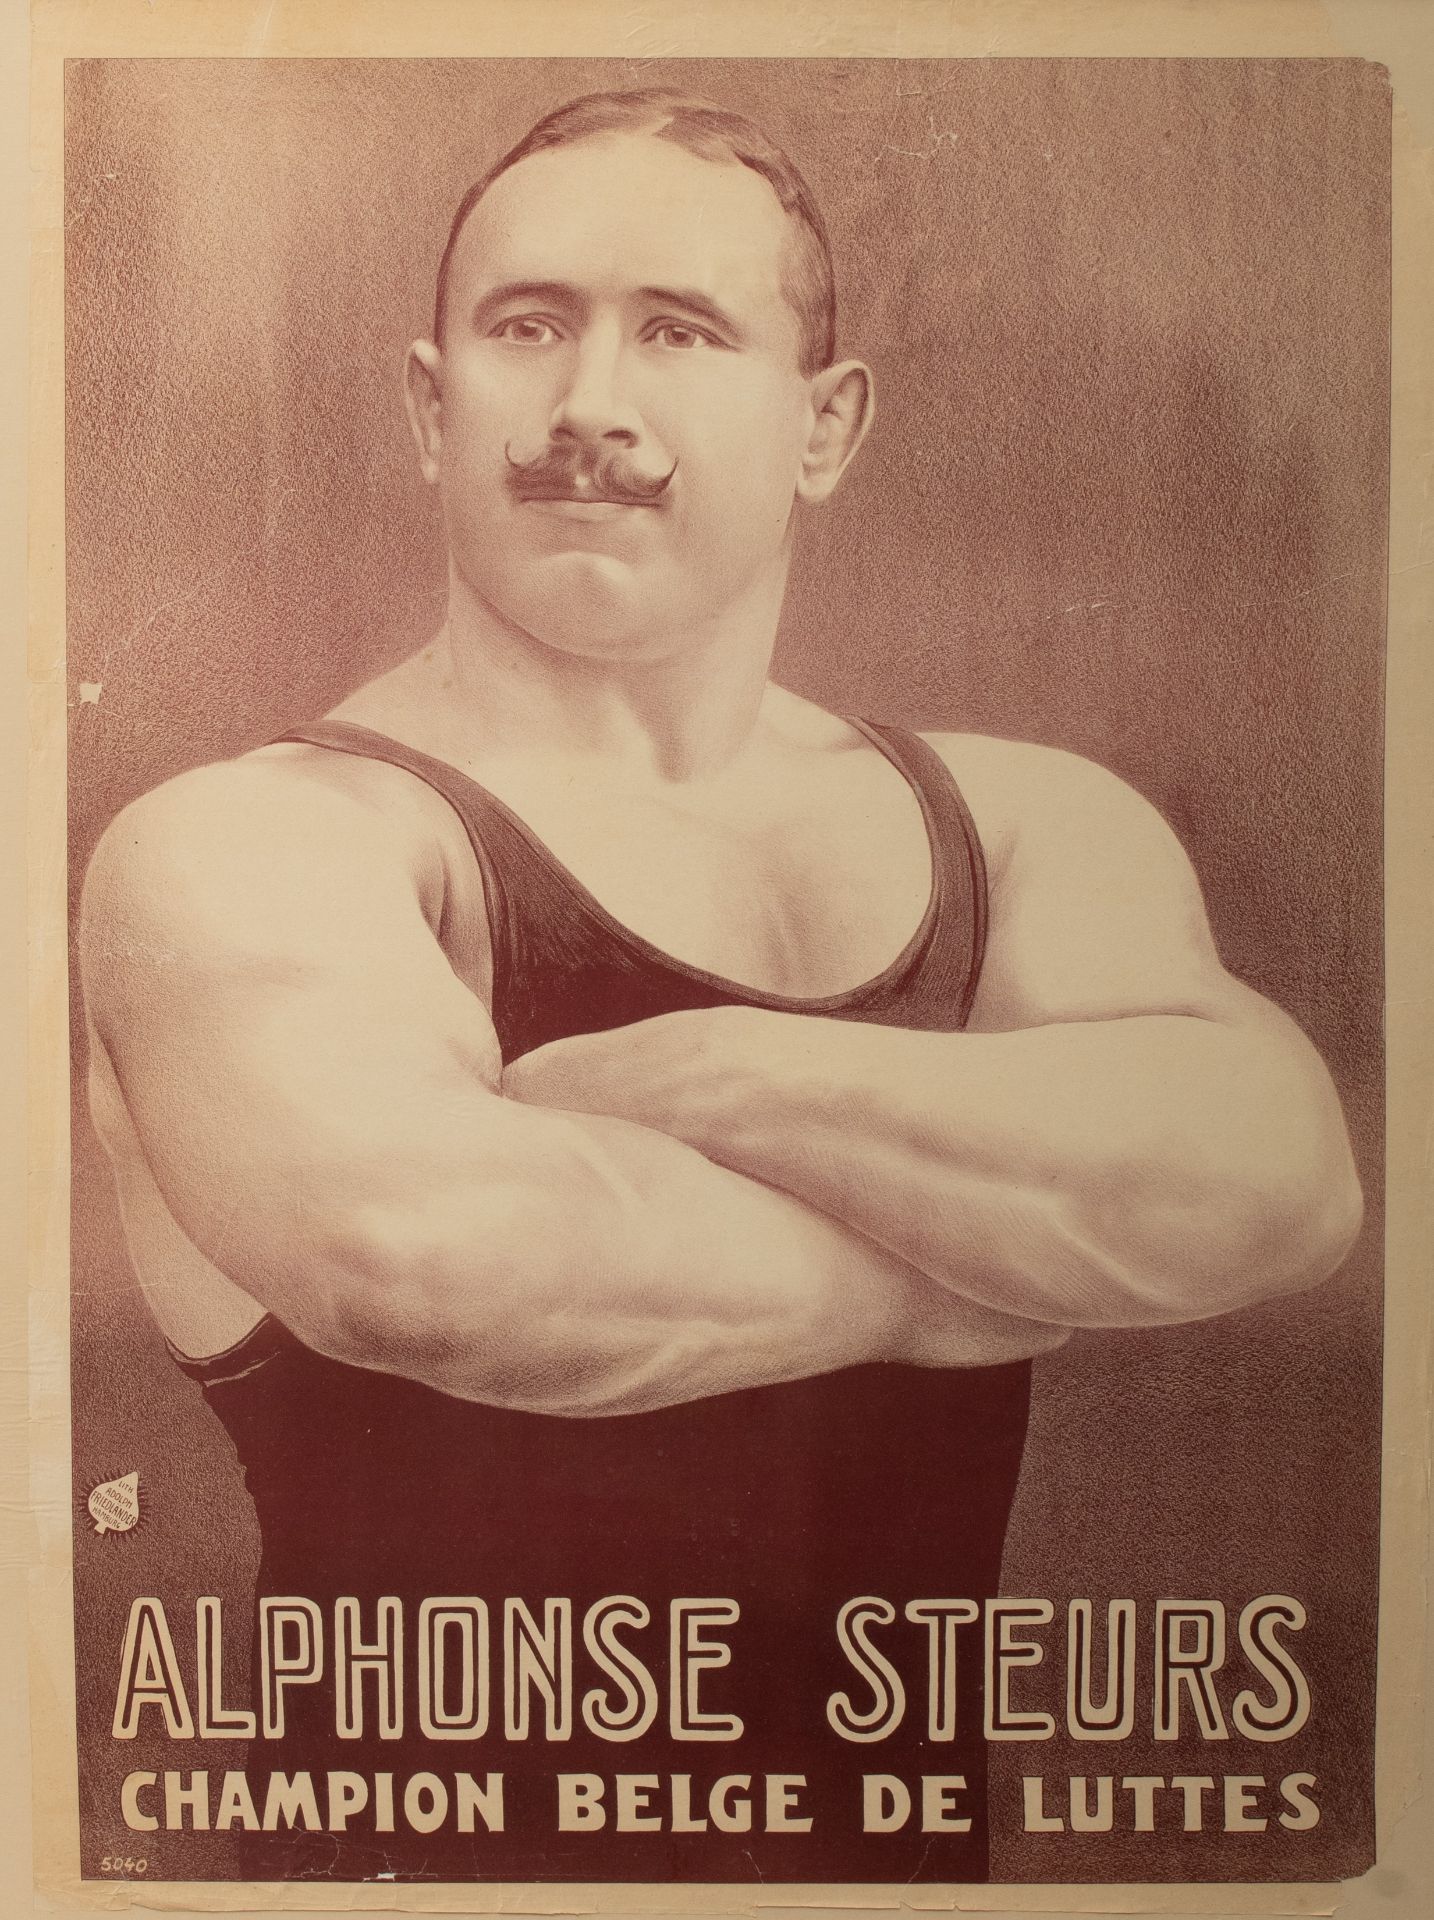 A vintage poster of the Belgian wrestler Alphonse Steurs, lithograph by Adolph Friedlander, ca. 1905